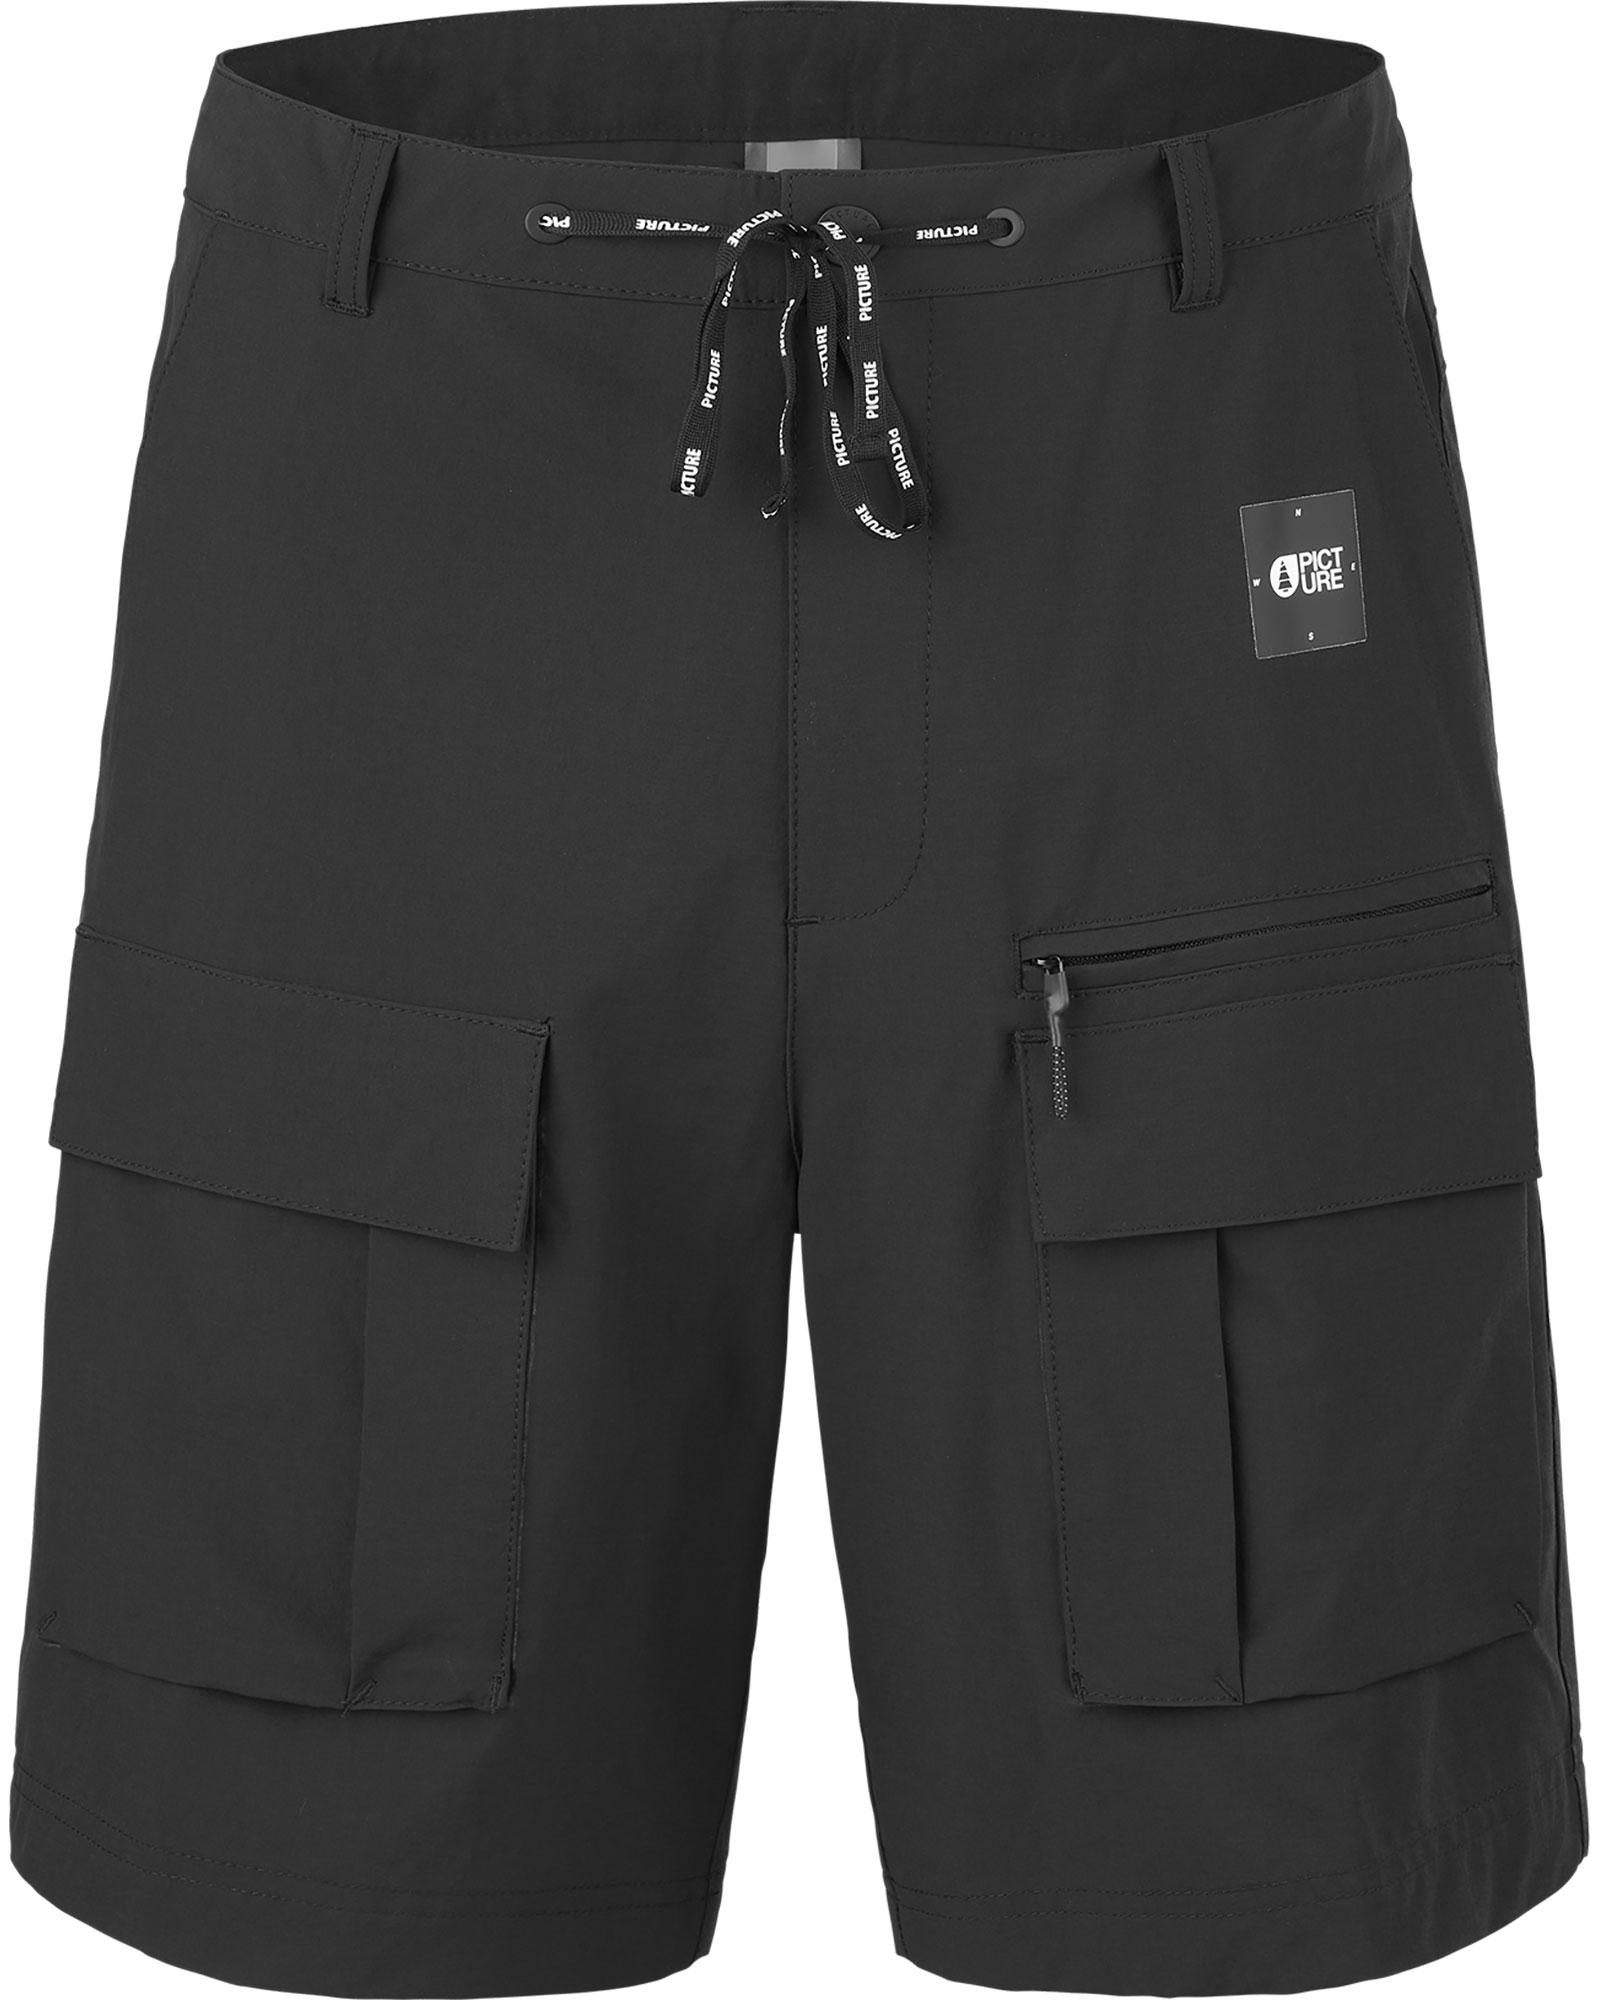 Picture Robust Men’s Shorts - black 34"